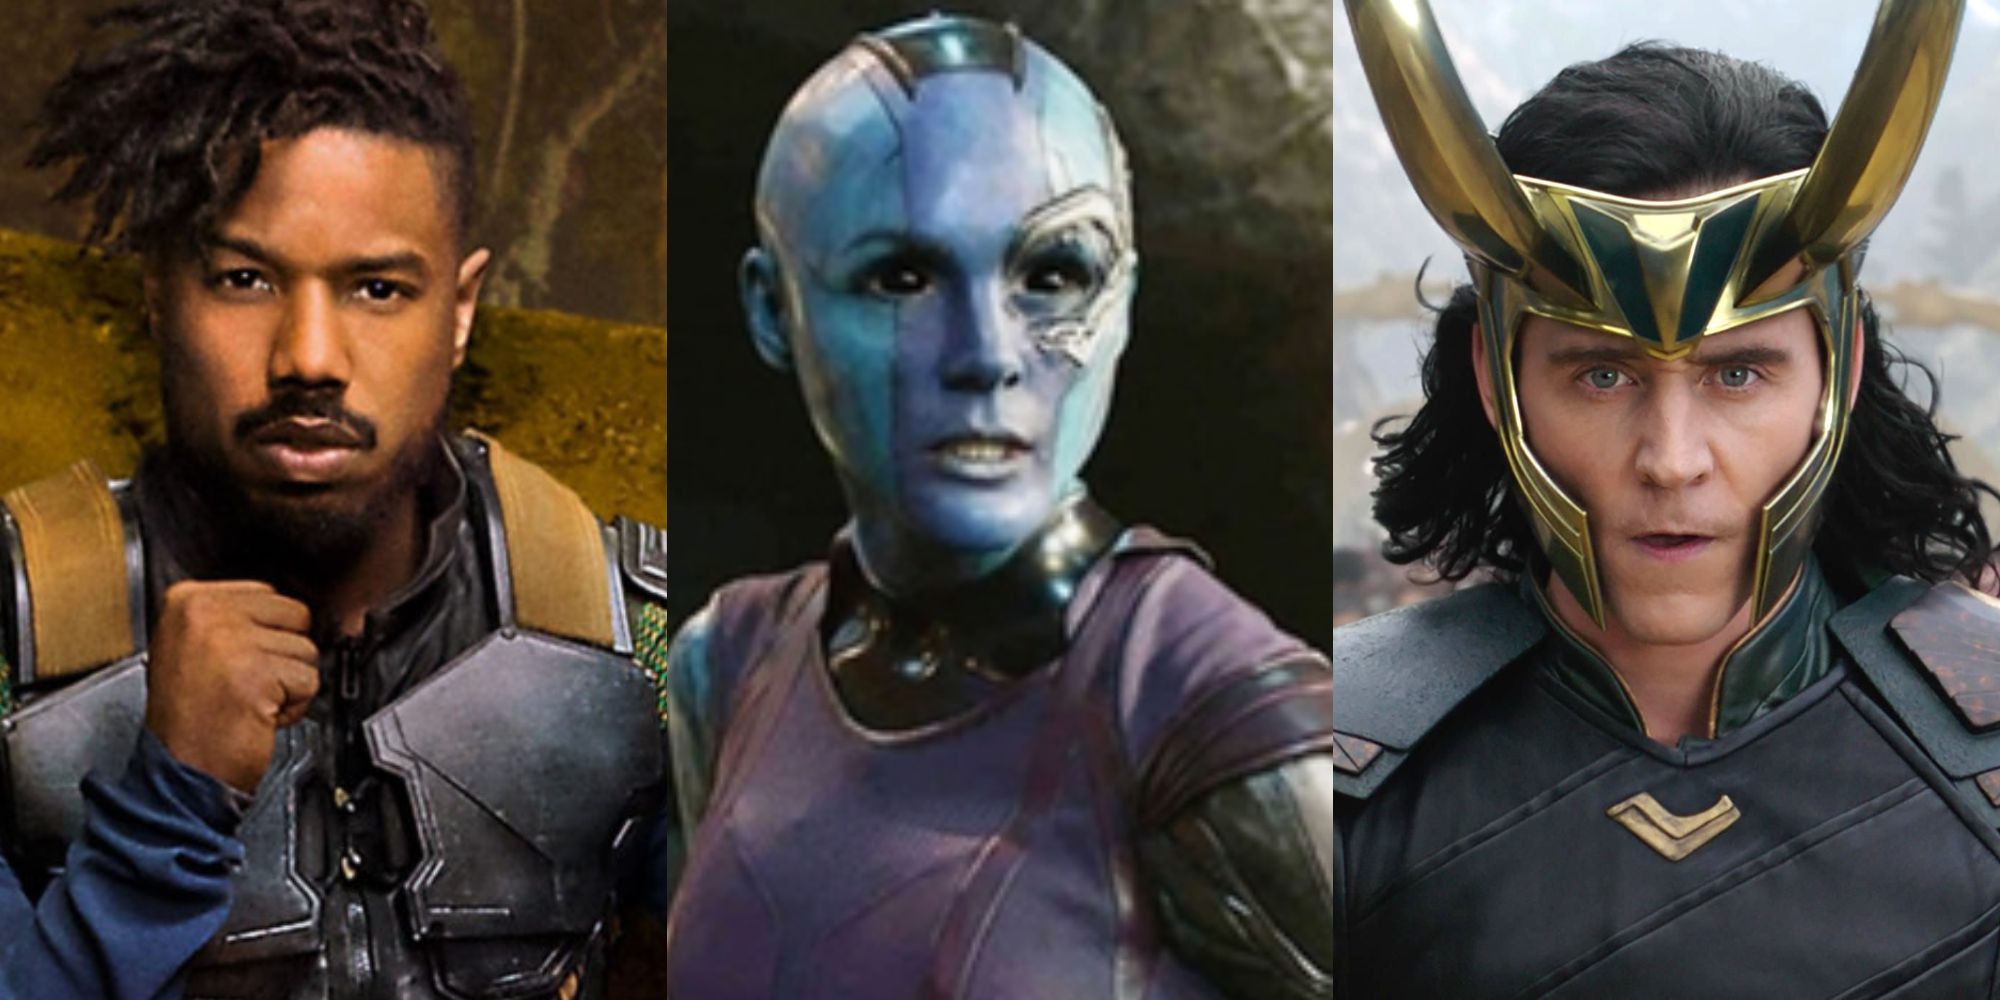 An image of Killmonger, Nebula, and Loki in the MCU